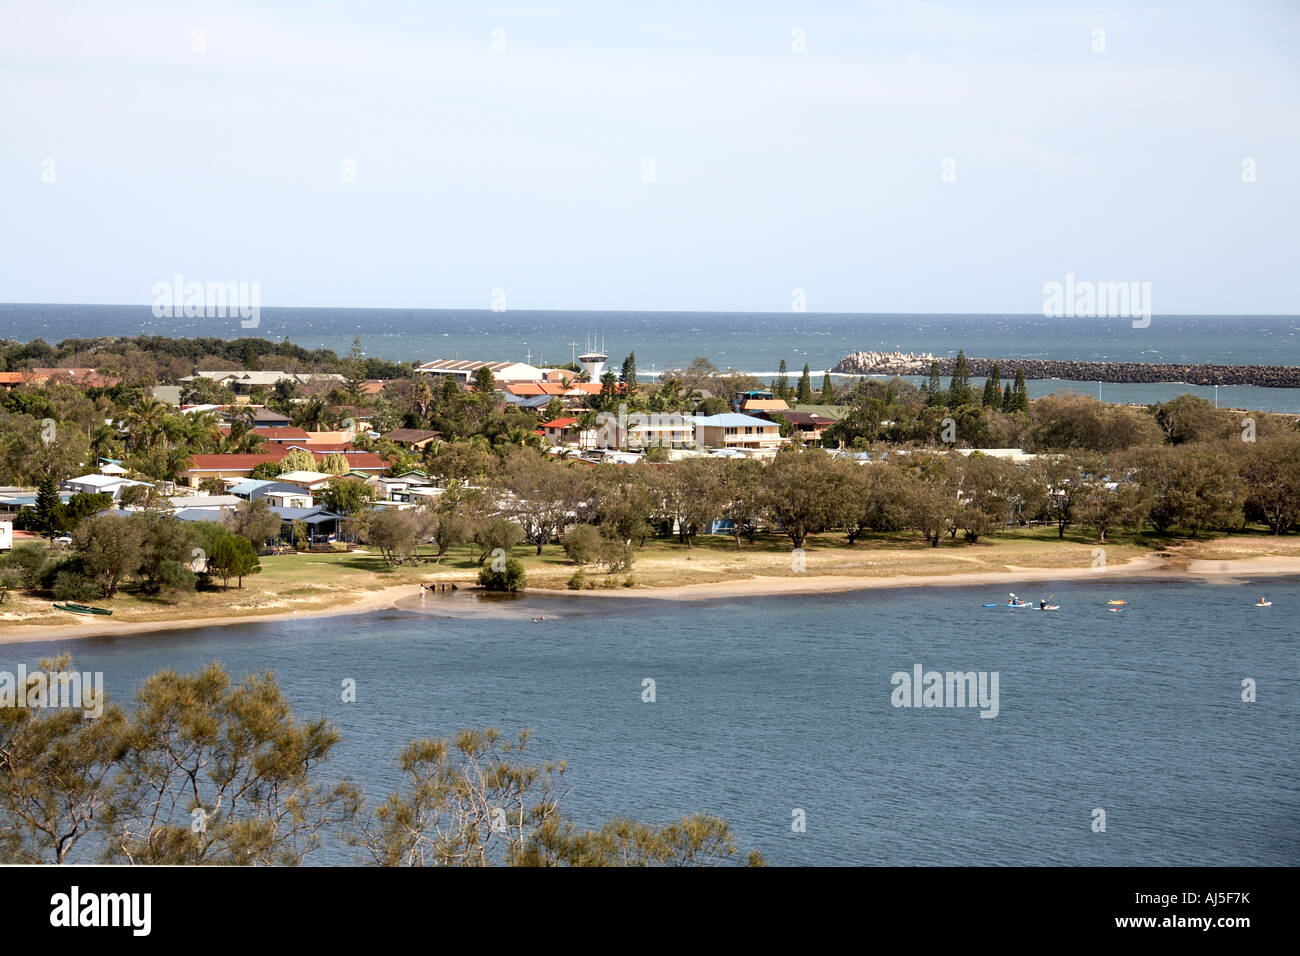 River Richmond estuary at Ballina in New South Wales NSW Australia Stock Photo